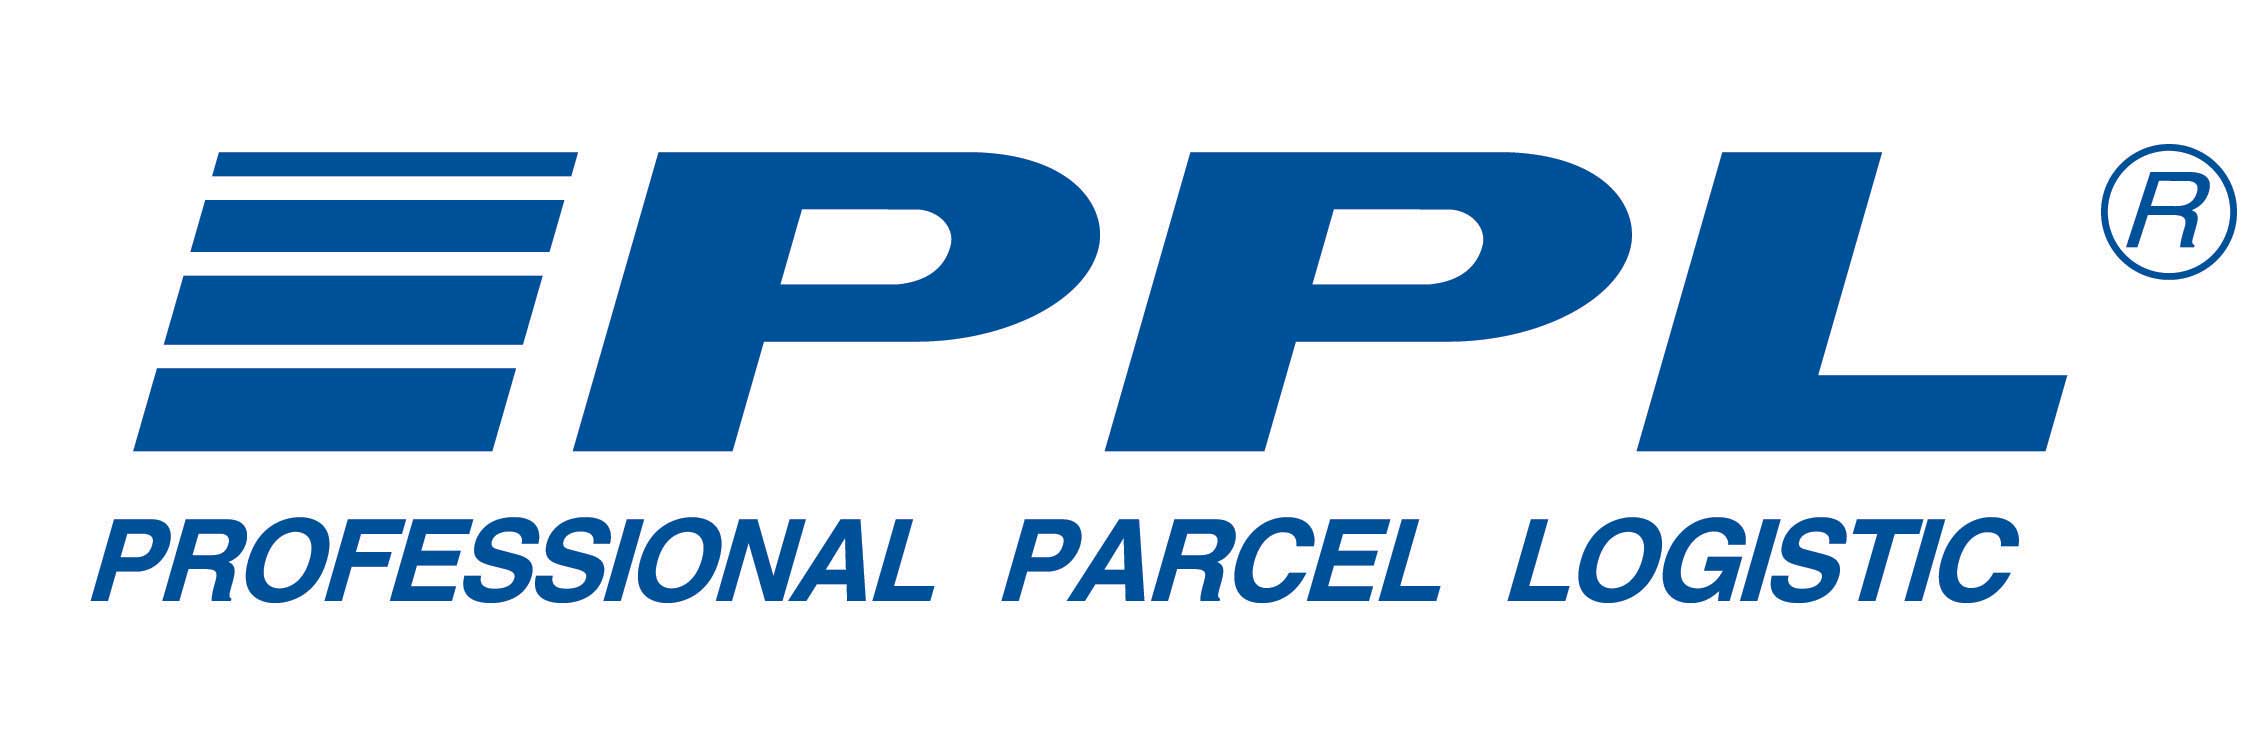 ppl_cz_logo